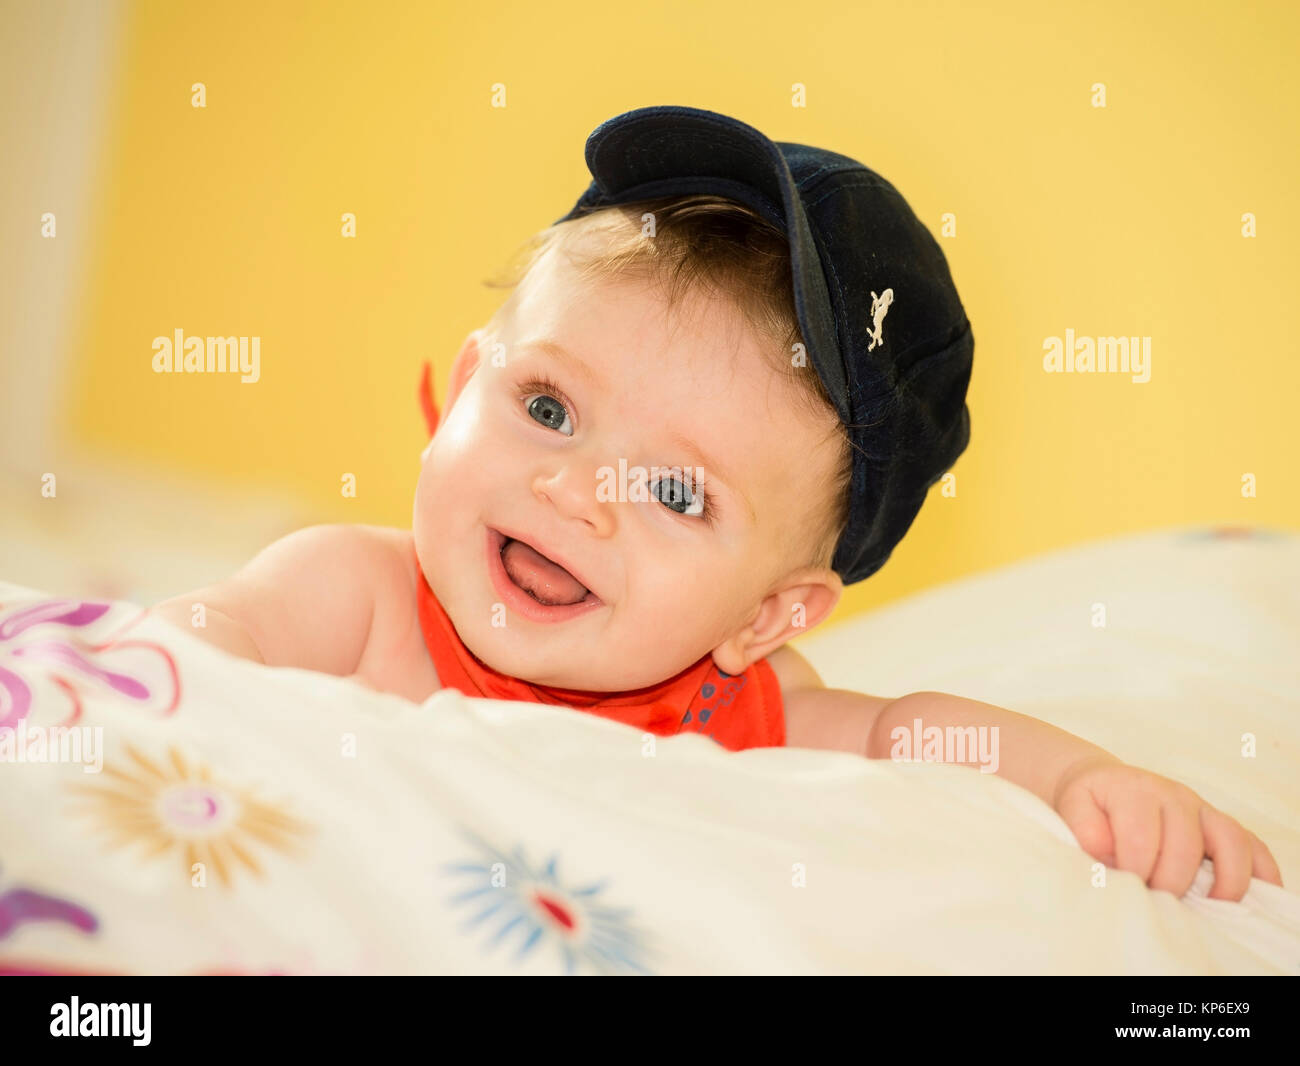 Bub, 6 Monate alt - little boy, 6 mese Foto Stock